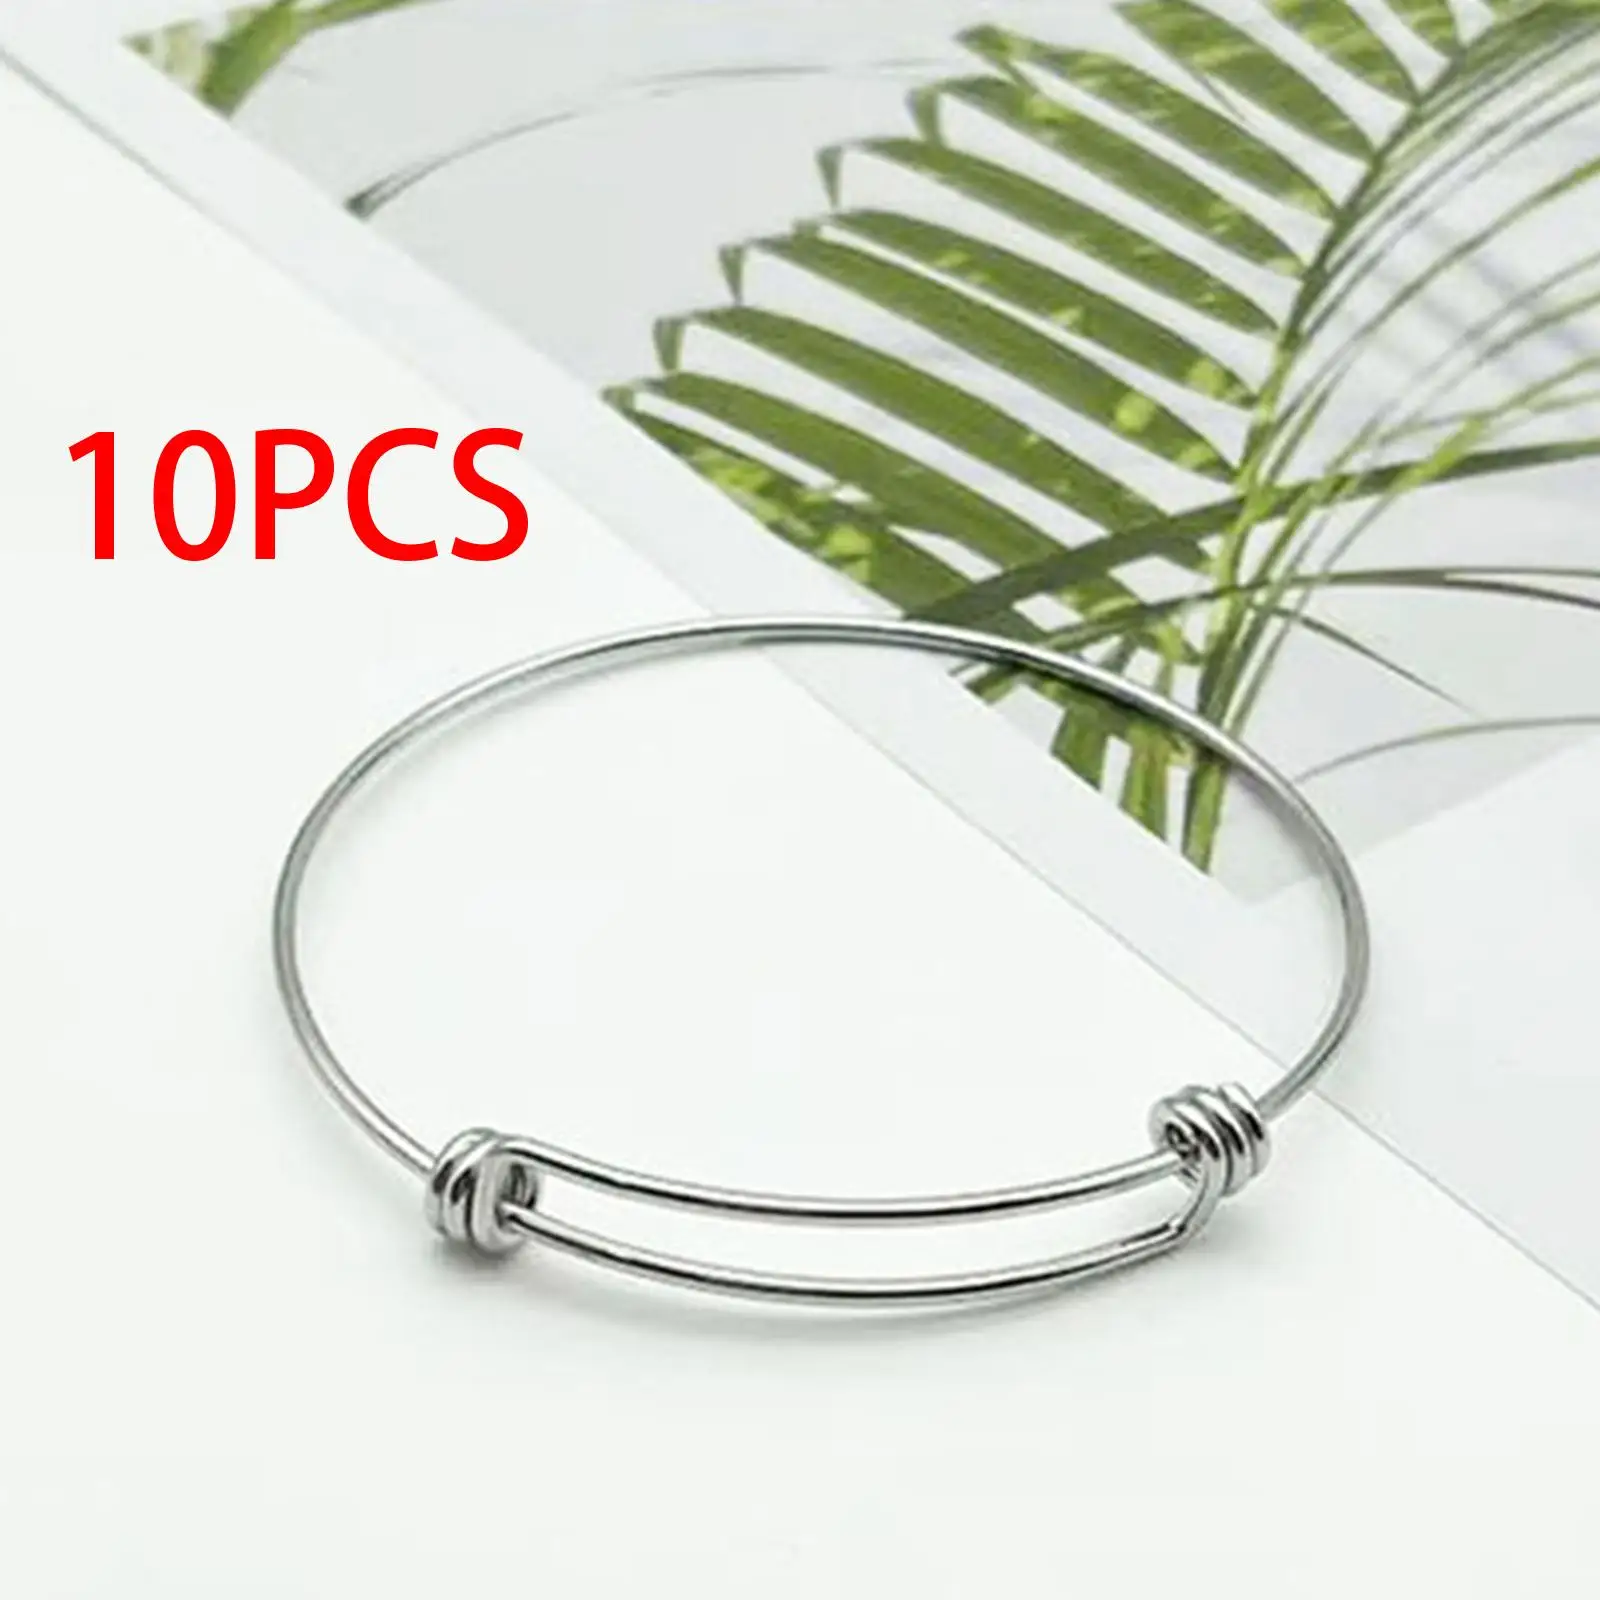 10x Stainless Steel Expandable Bangle Bracelets  Charm Bracelet, Handmade Wire Bracelets, for  Making